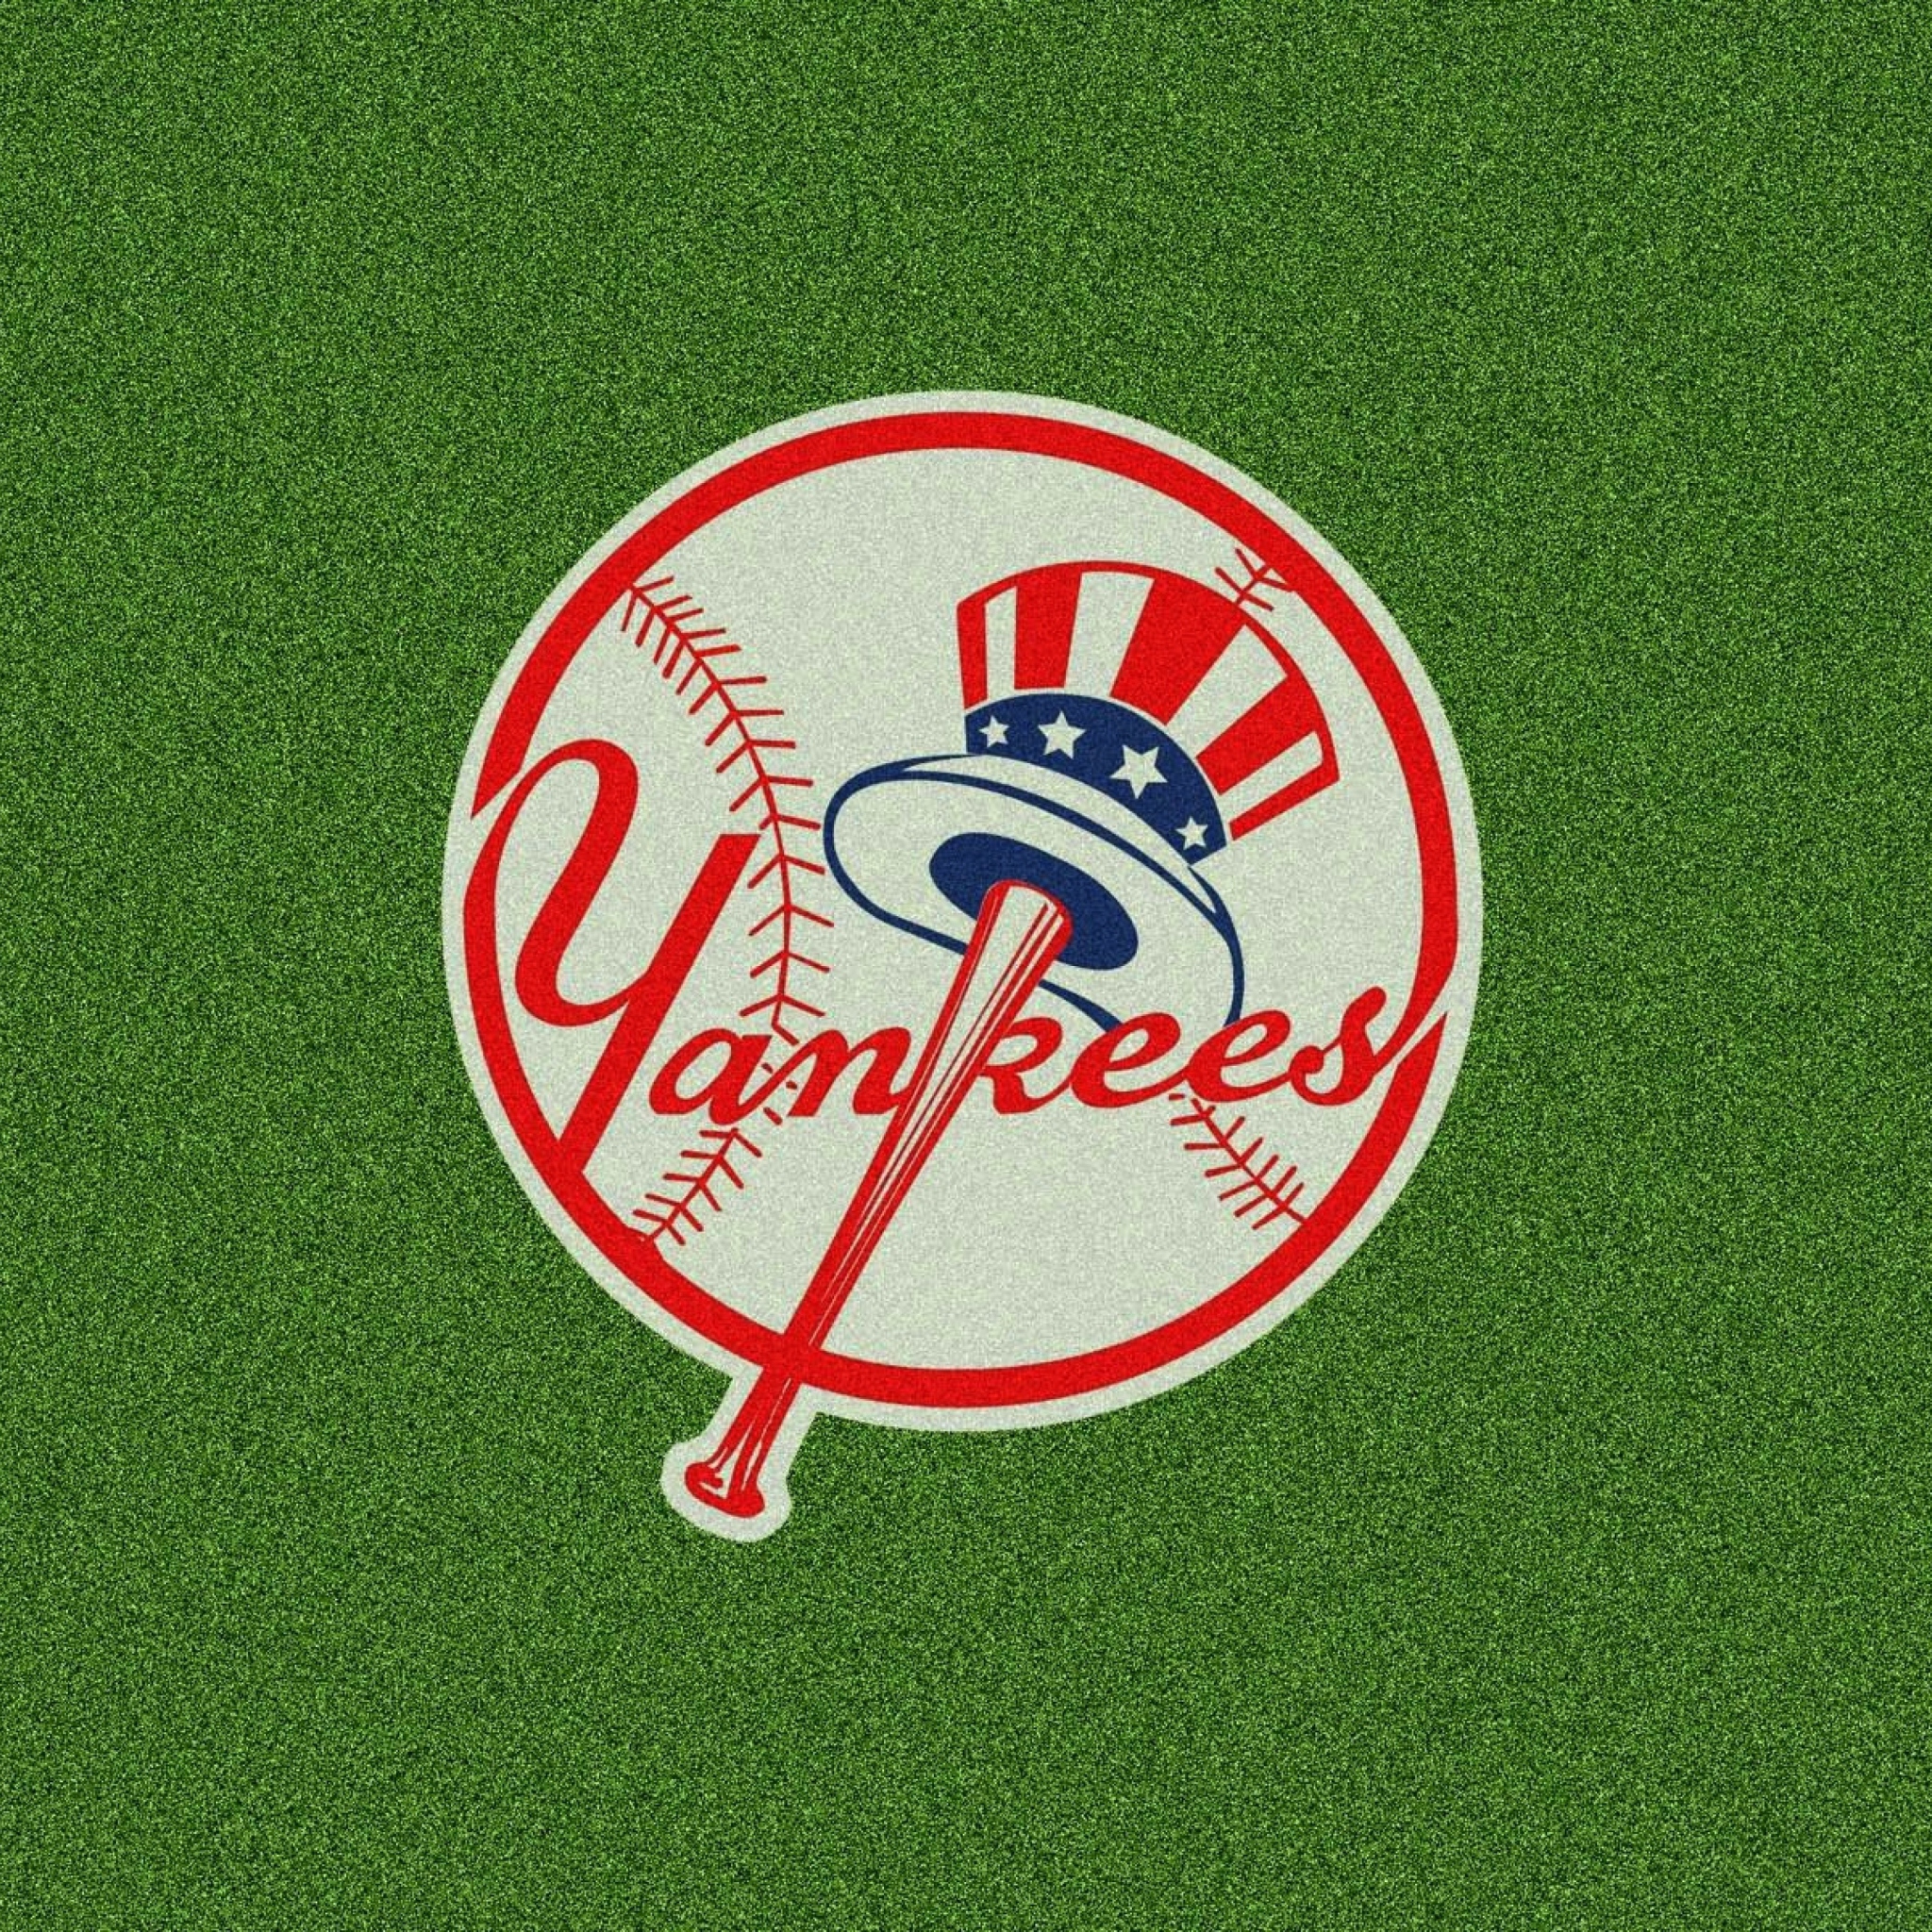 New York Yankees, Baseball club - Fondos de pantalla gratis para iPad Air